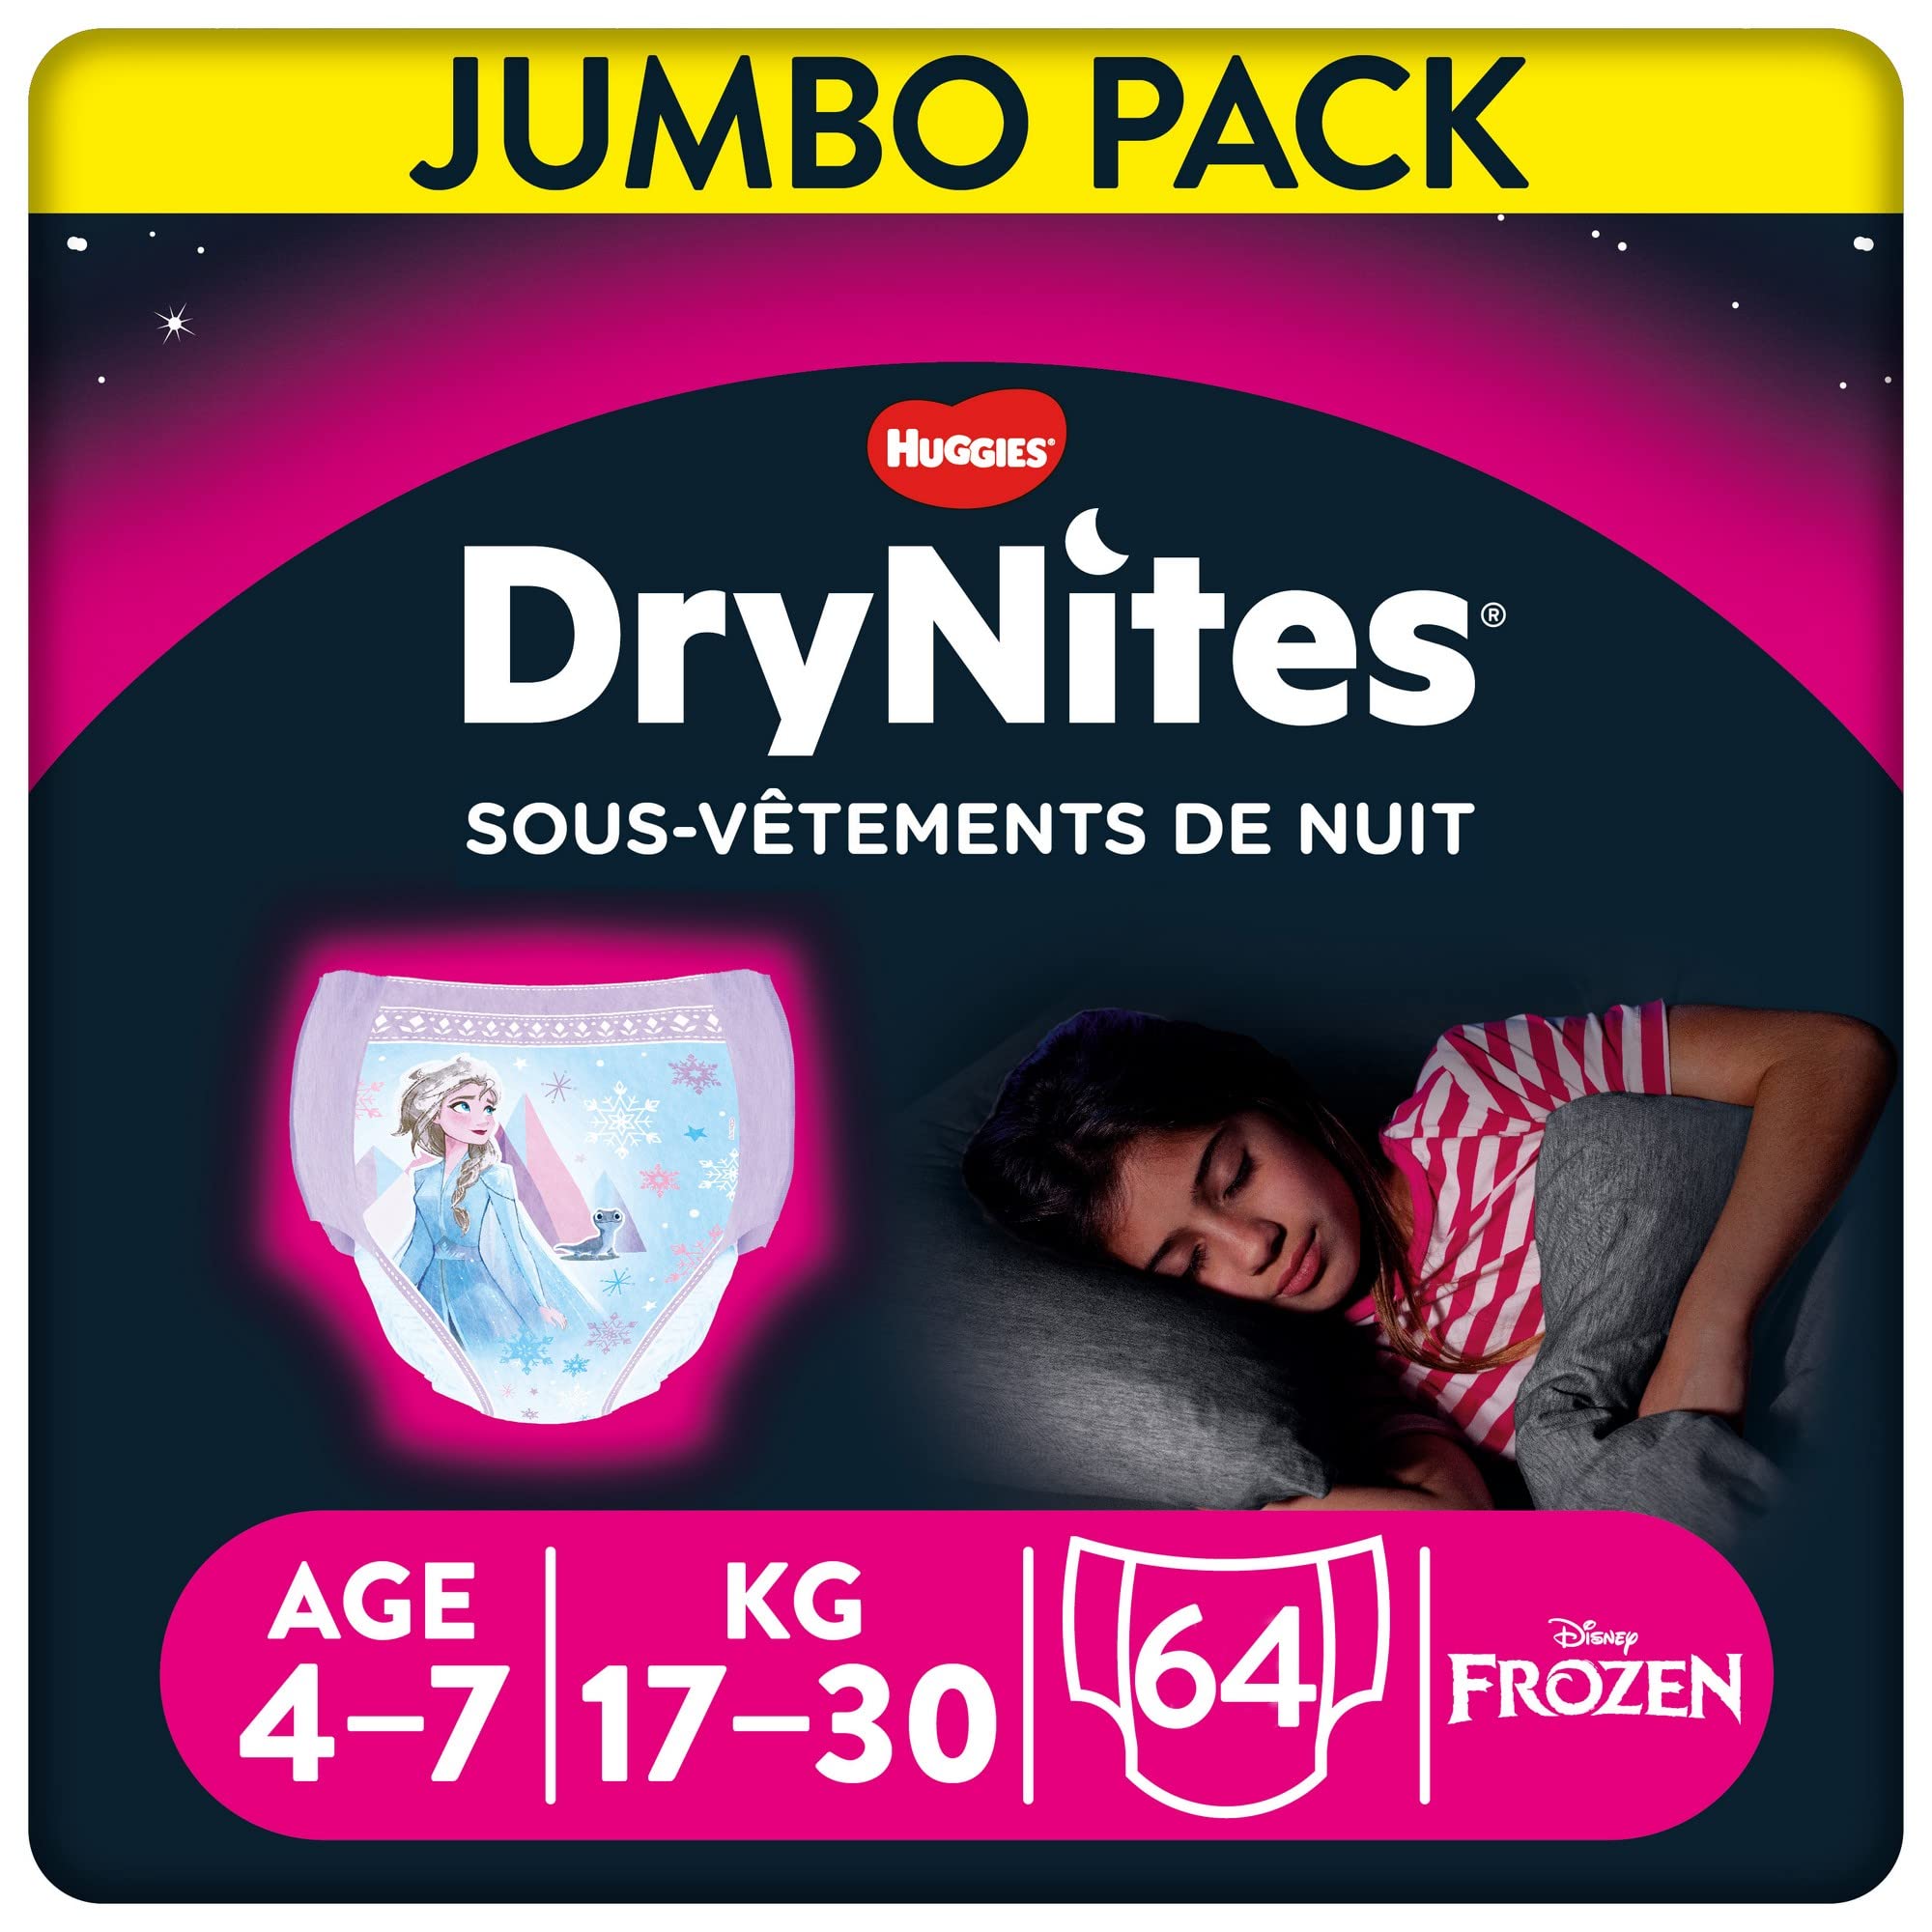 Drynites Pyjama Pants, Age 4-7 Y, Girl, 17-30 Kg, 64 Bed Wetting Pants سروال بيجامة، من عمر 4-7 سنوات، للبنات، وزن من 17 - 30 كغم، 64 سروال التبول اللاارادي، من دراينايتس